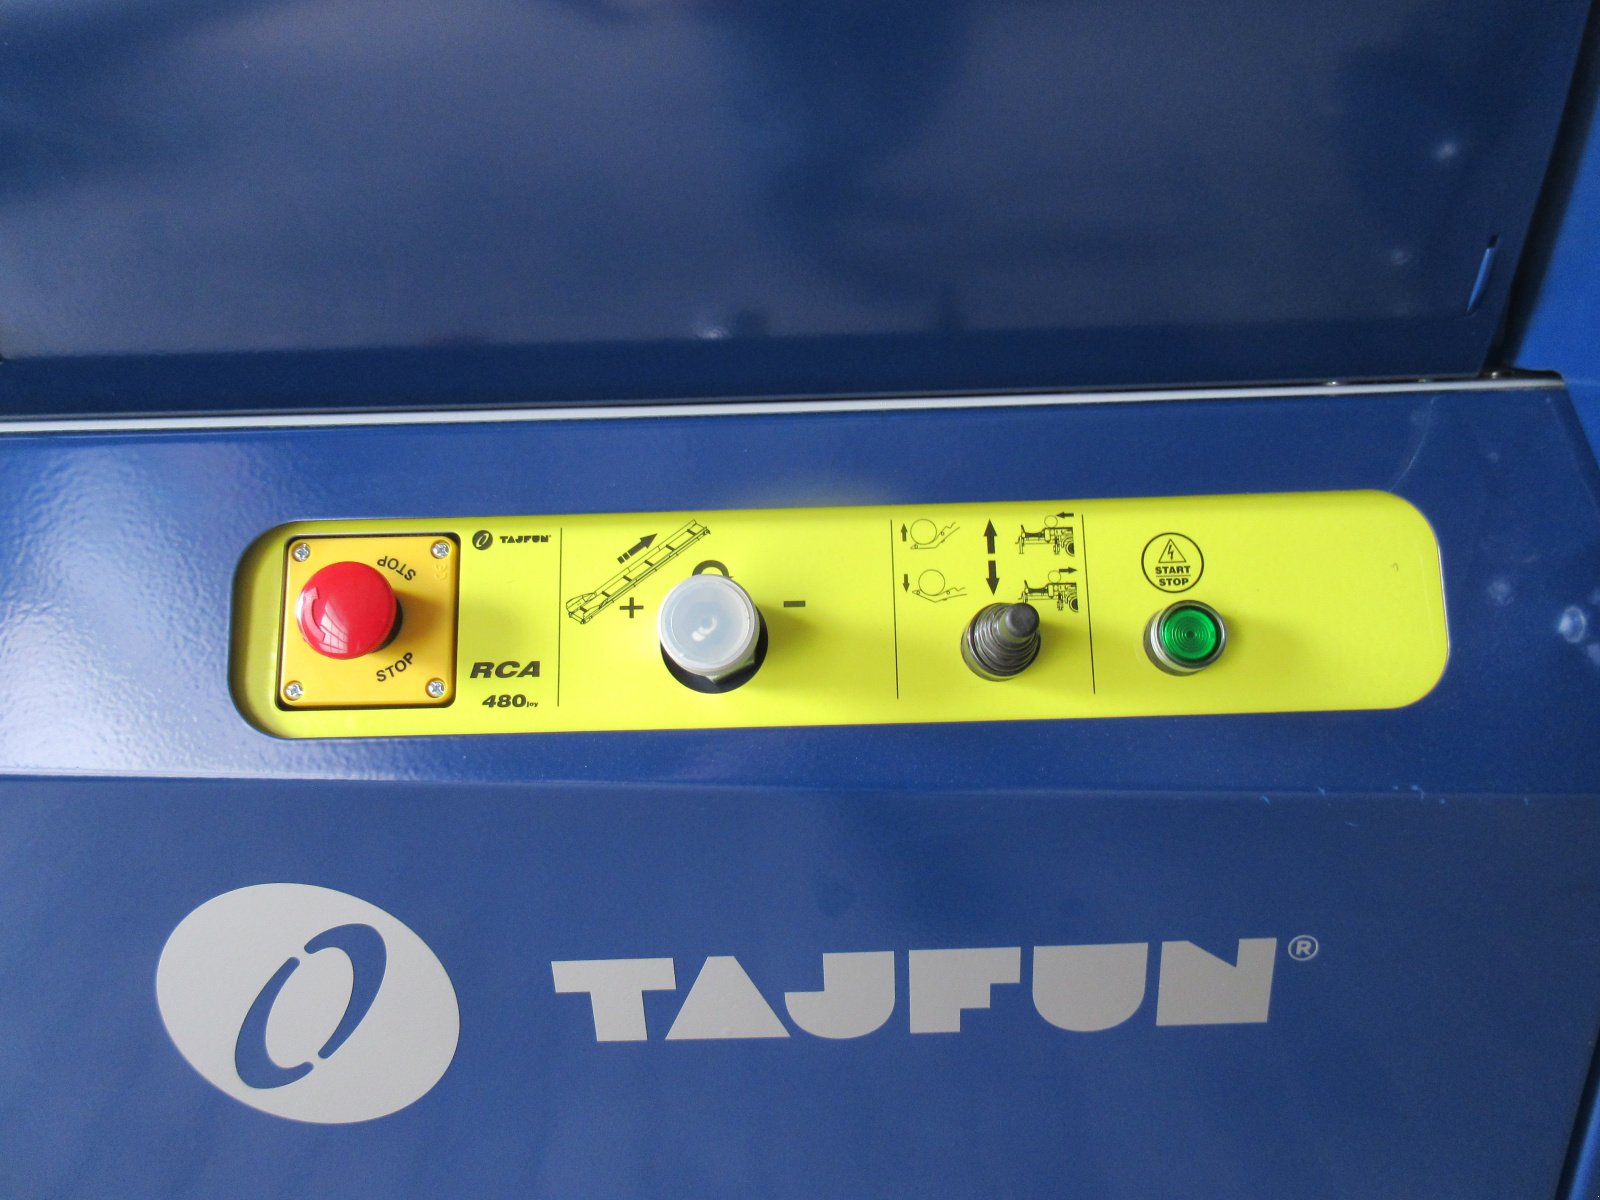 Sägeautomat & Spaltautomat des Typs Tajfun RCA 480, Neumaschine in Pliening (Bild 4)